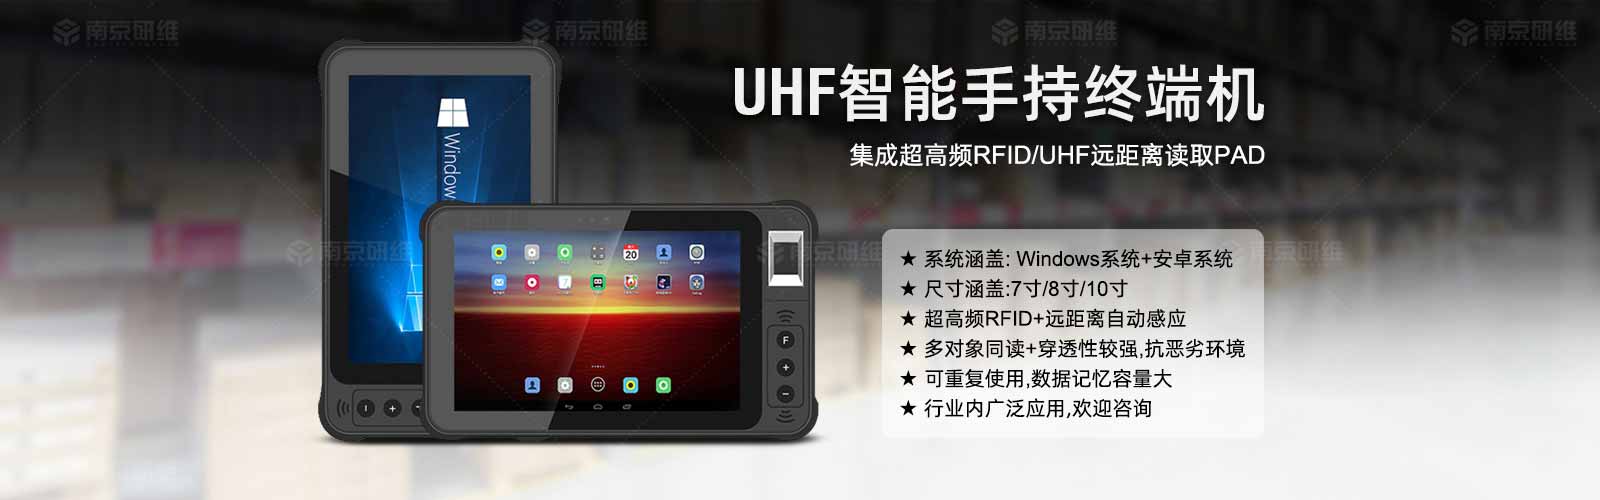 UHF智能手持终端机，集成超高频RFID，UHF远距离读取PAD，涵盖windows、安卓系统，尺寸涵盖7、8、10寸